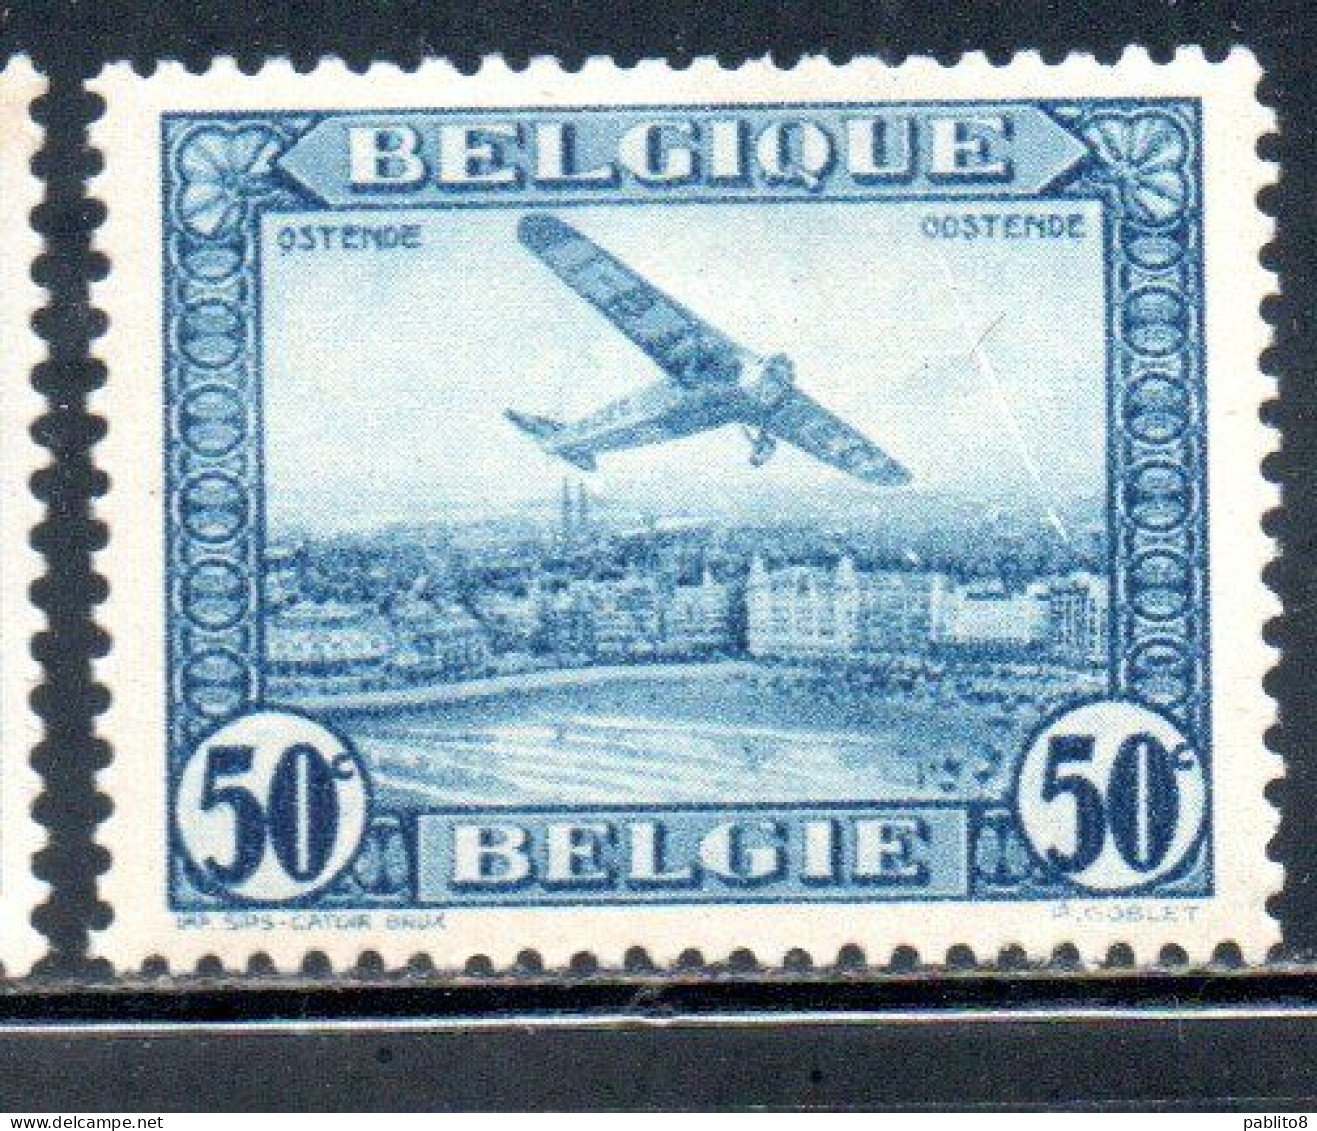 BELGIQUE BELGIE BELGIO BELGIUM 1930 AIR POST MAIL STAMP AIRMAIL FOKKER FVII/3m OVER OSTEND 50c MH - Postfris